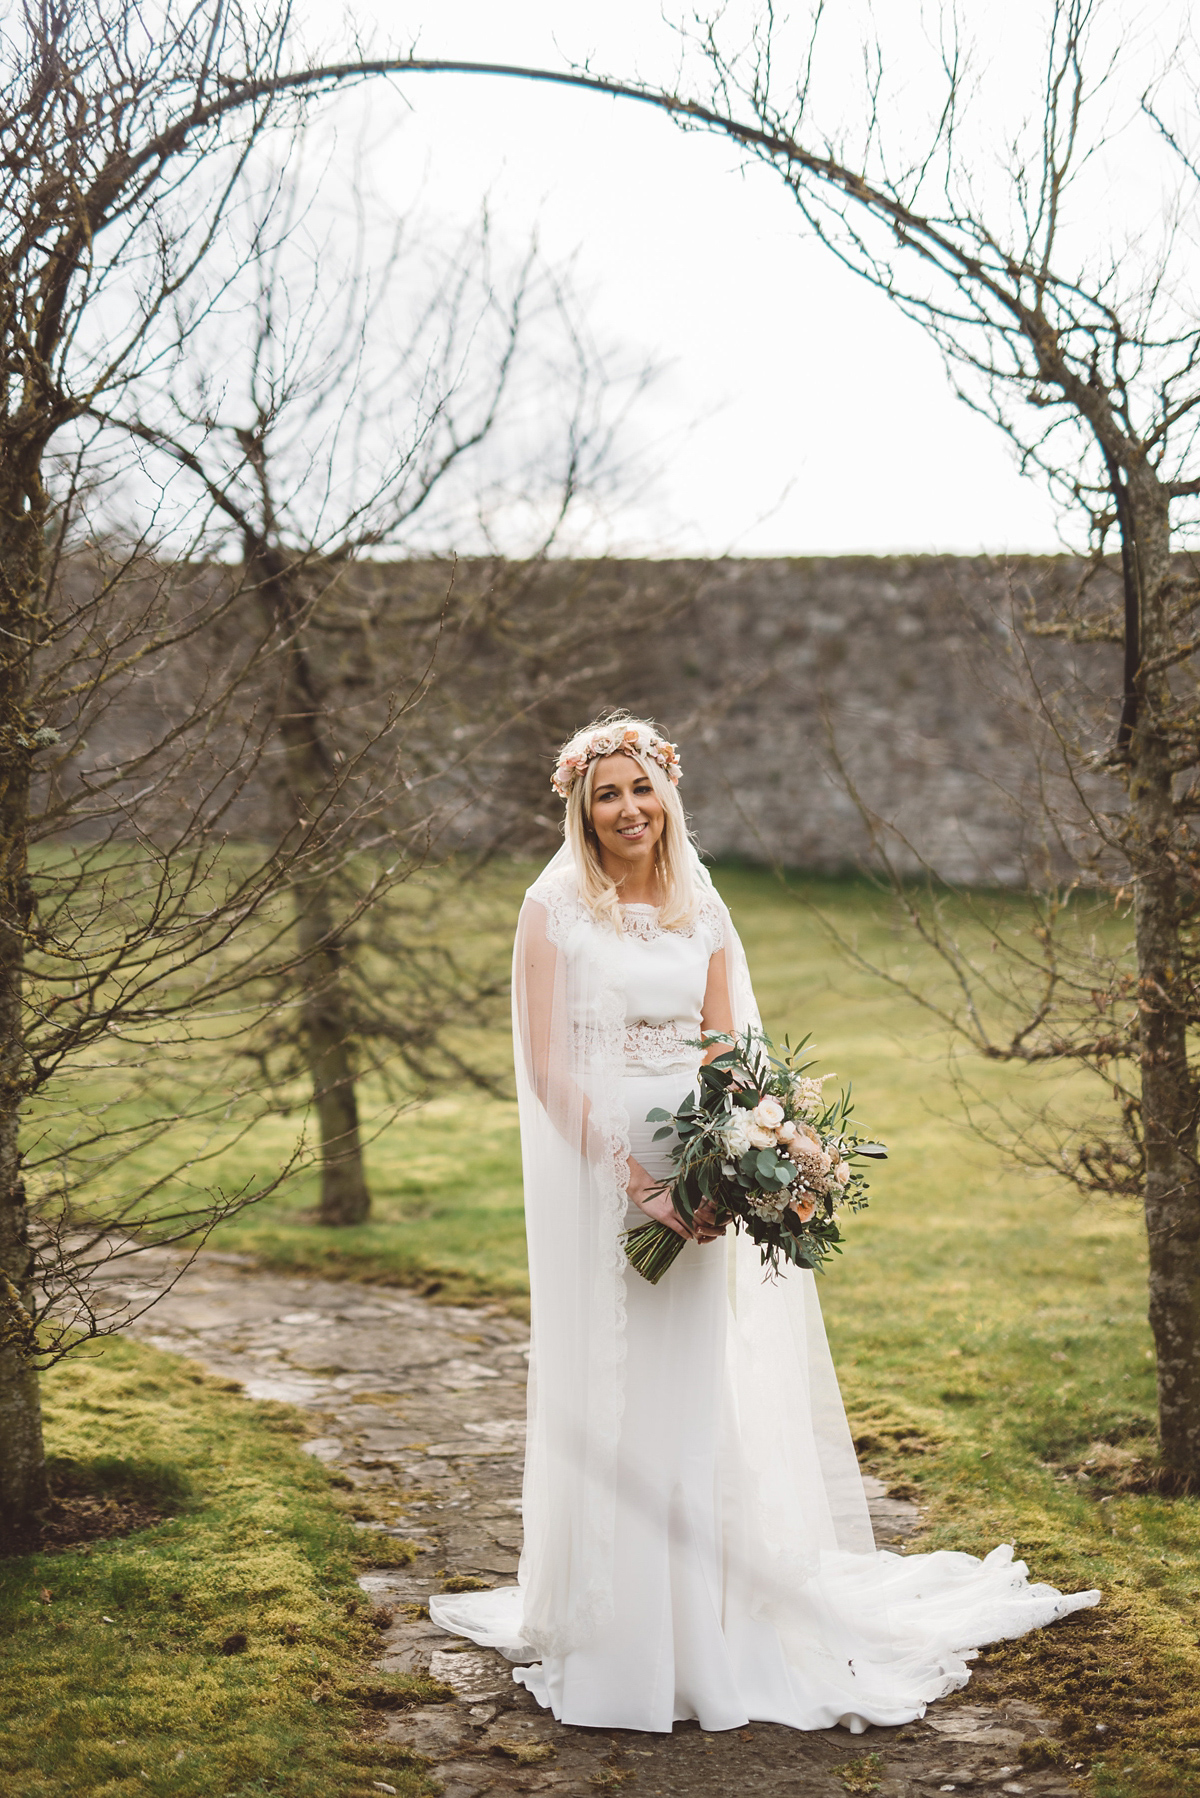 Bride Heidi wears Rime Arodaky separates for her French wedding in Ireland. Kat Mervyn Photography.